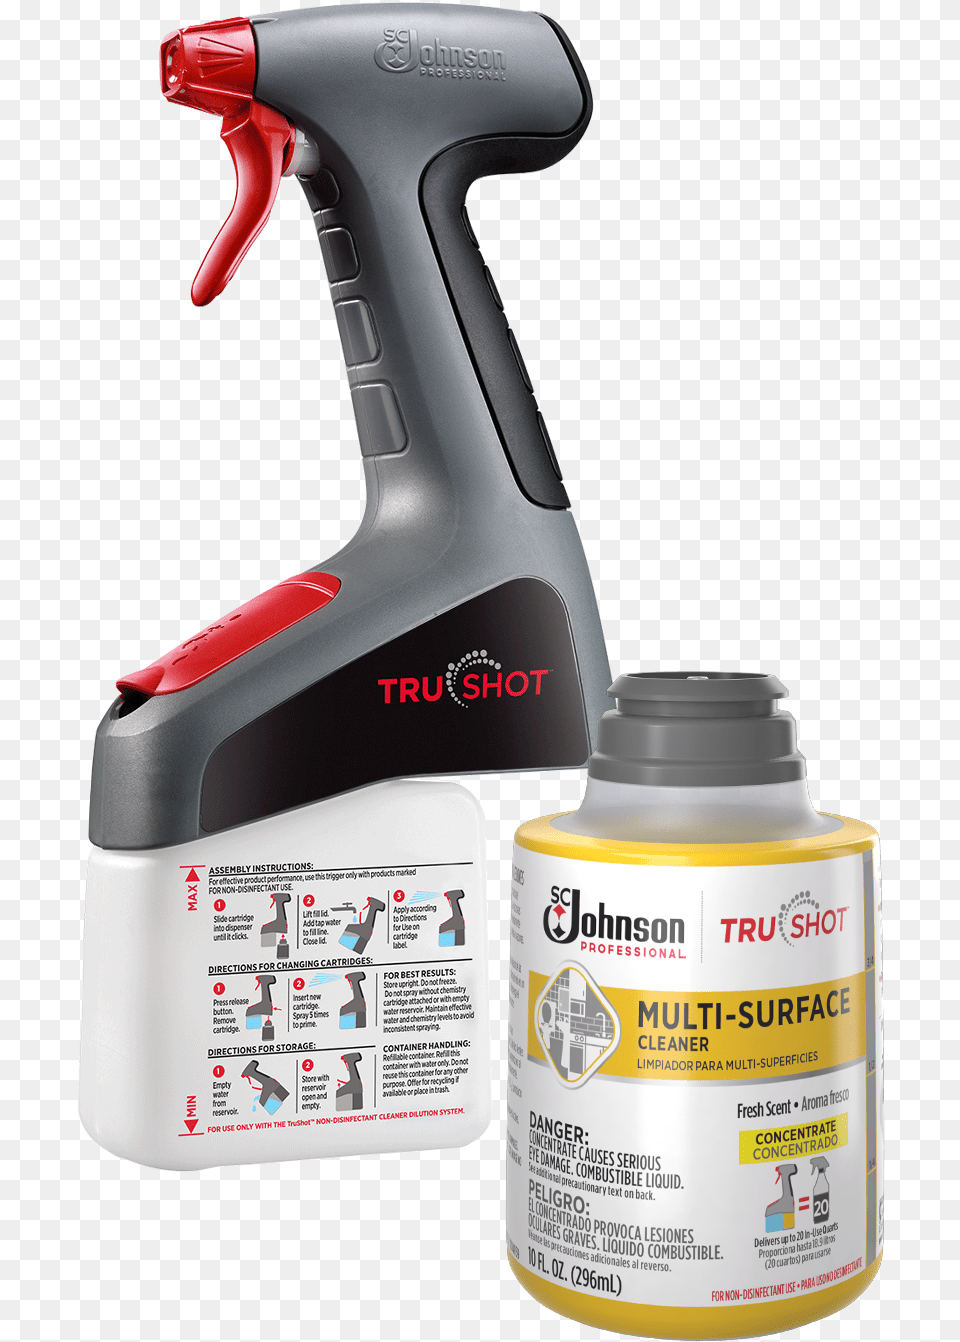 Multisurface Trushot 300 Dpi Johnson Profecional Tru Shot, Can, Spray Can, Tin, Device Free Png